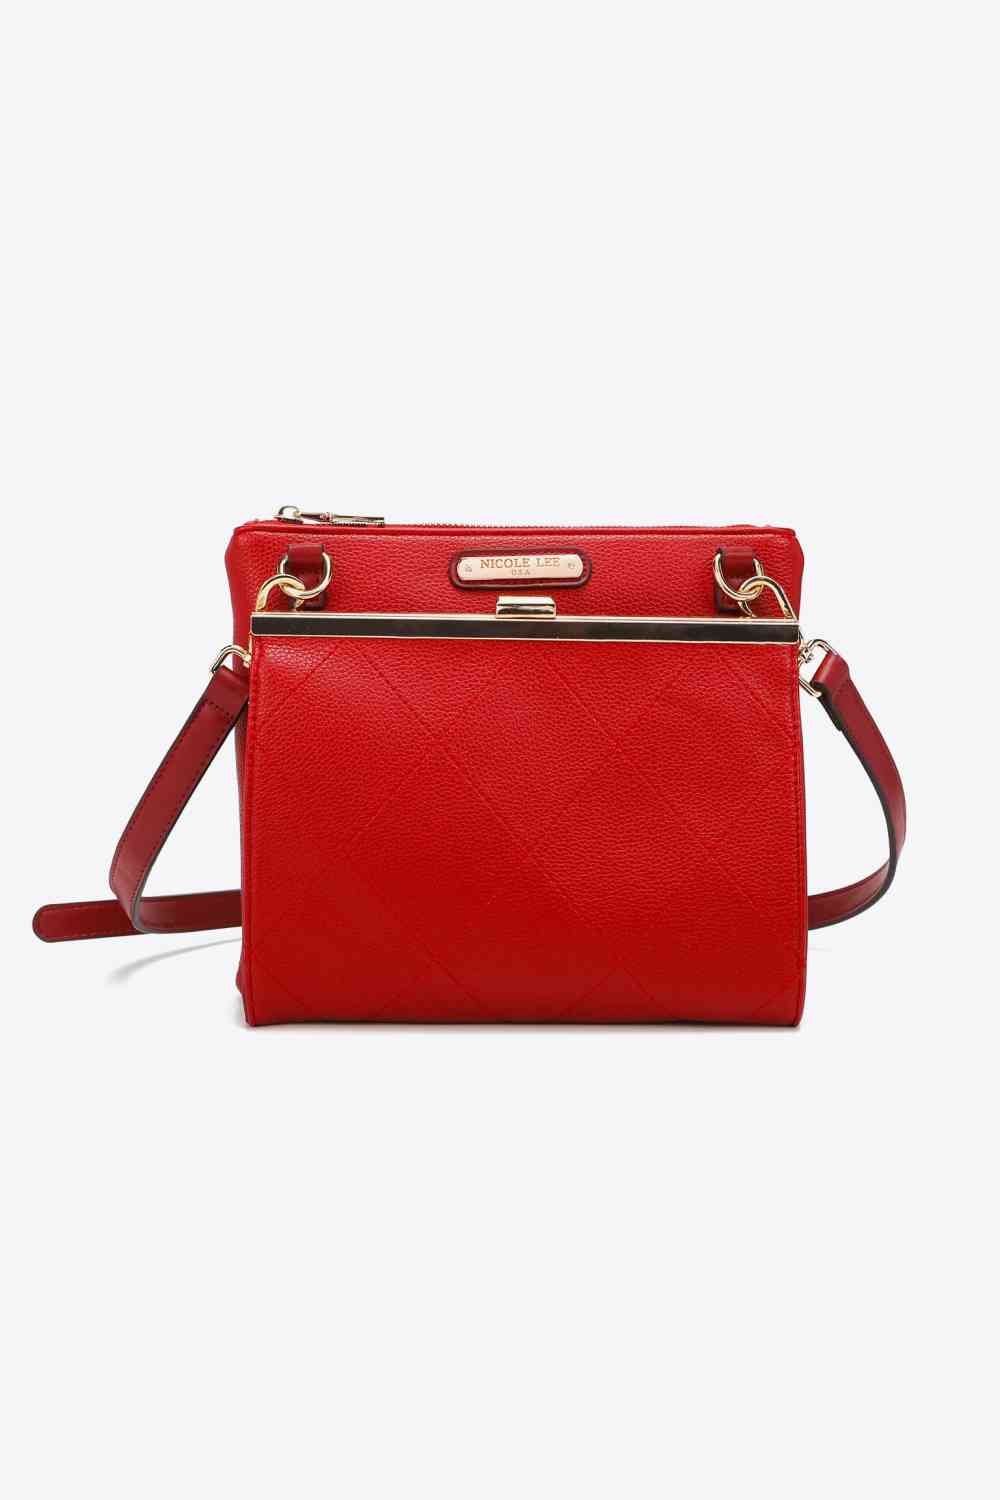 TEEK - NL All Day Everyday Handbag BAG TEEK Trend Red  